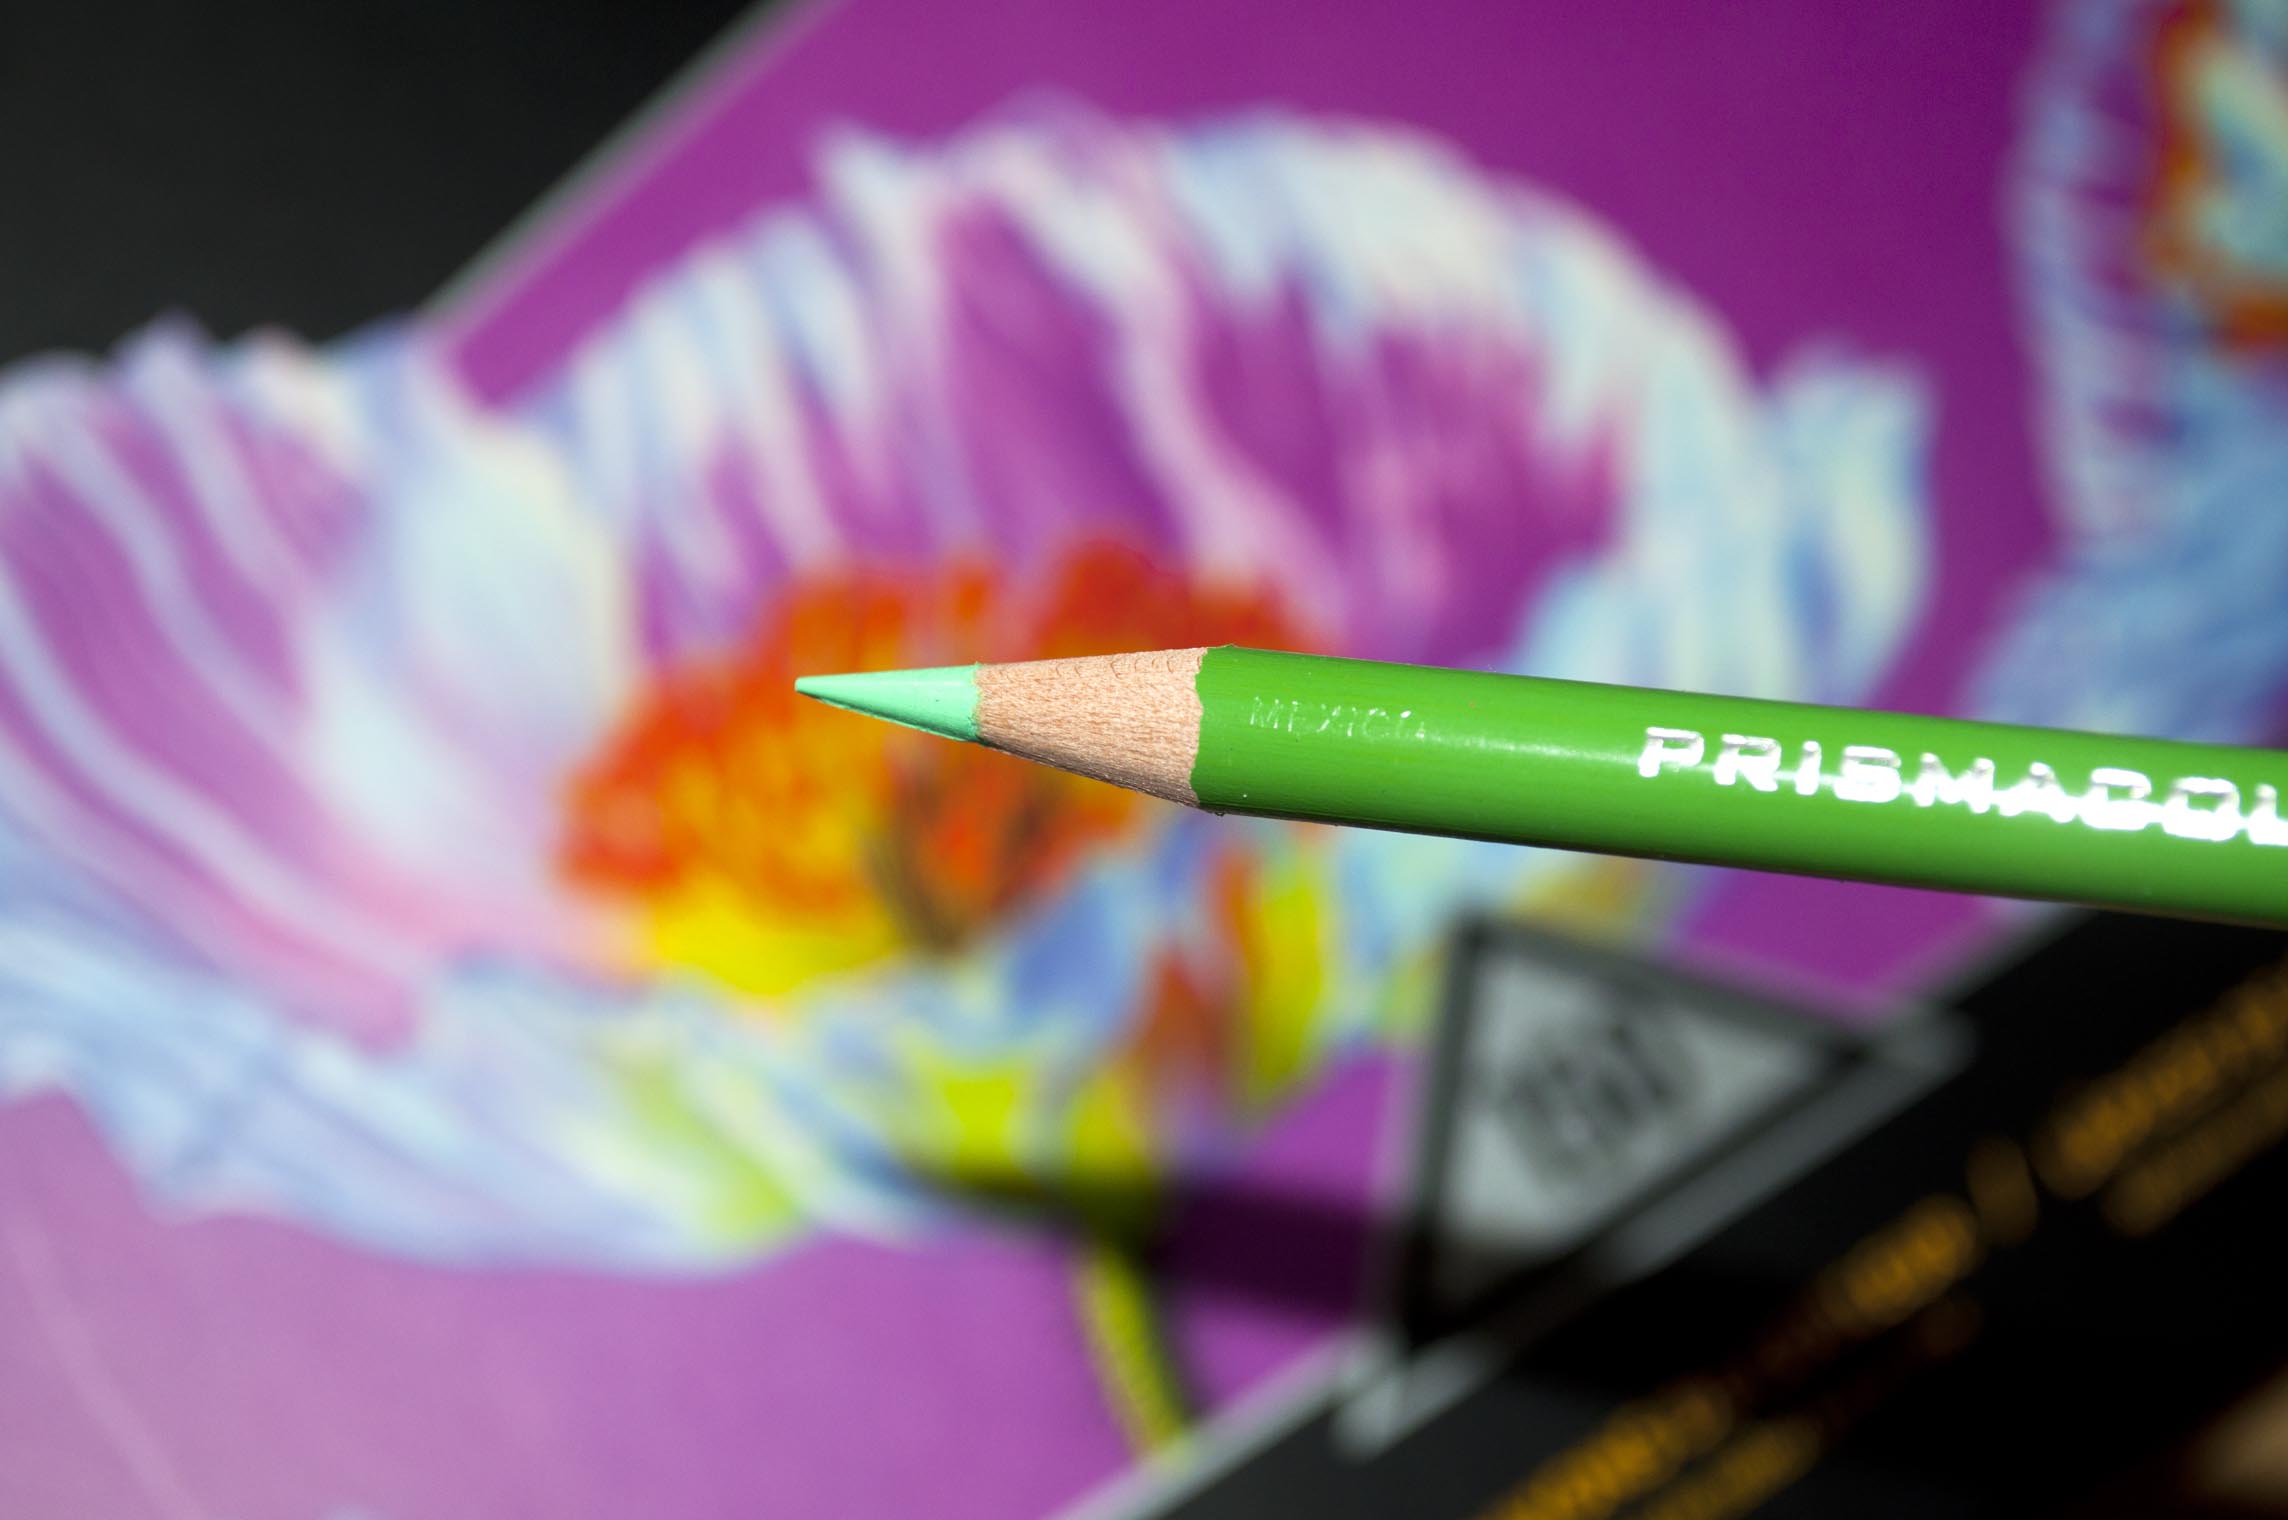 Prismacolor Premier Soft Core Colored Pencil, Choose from 150